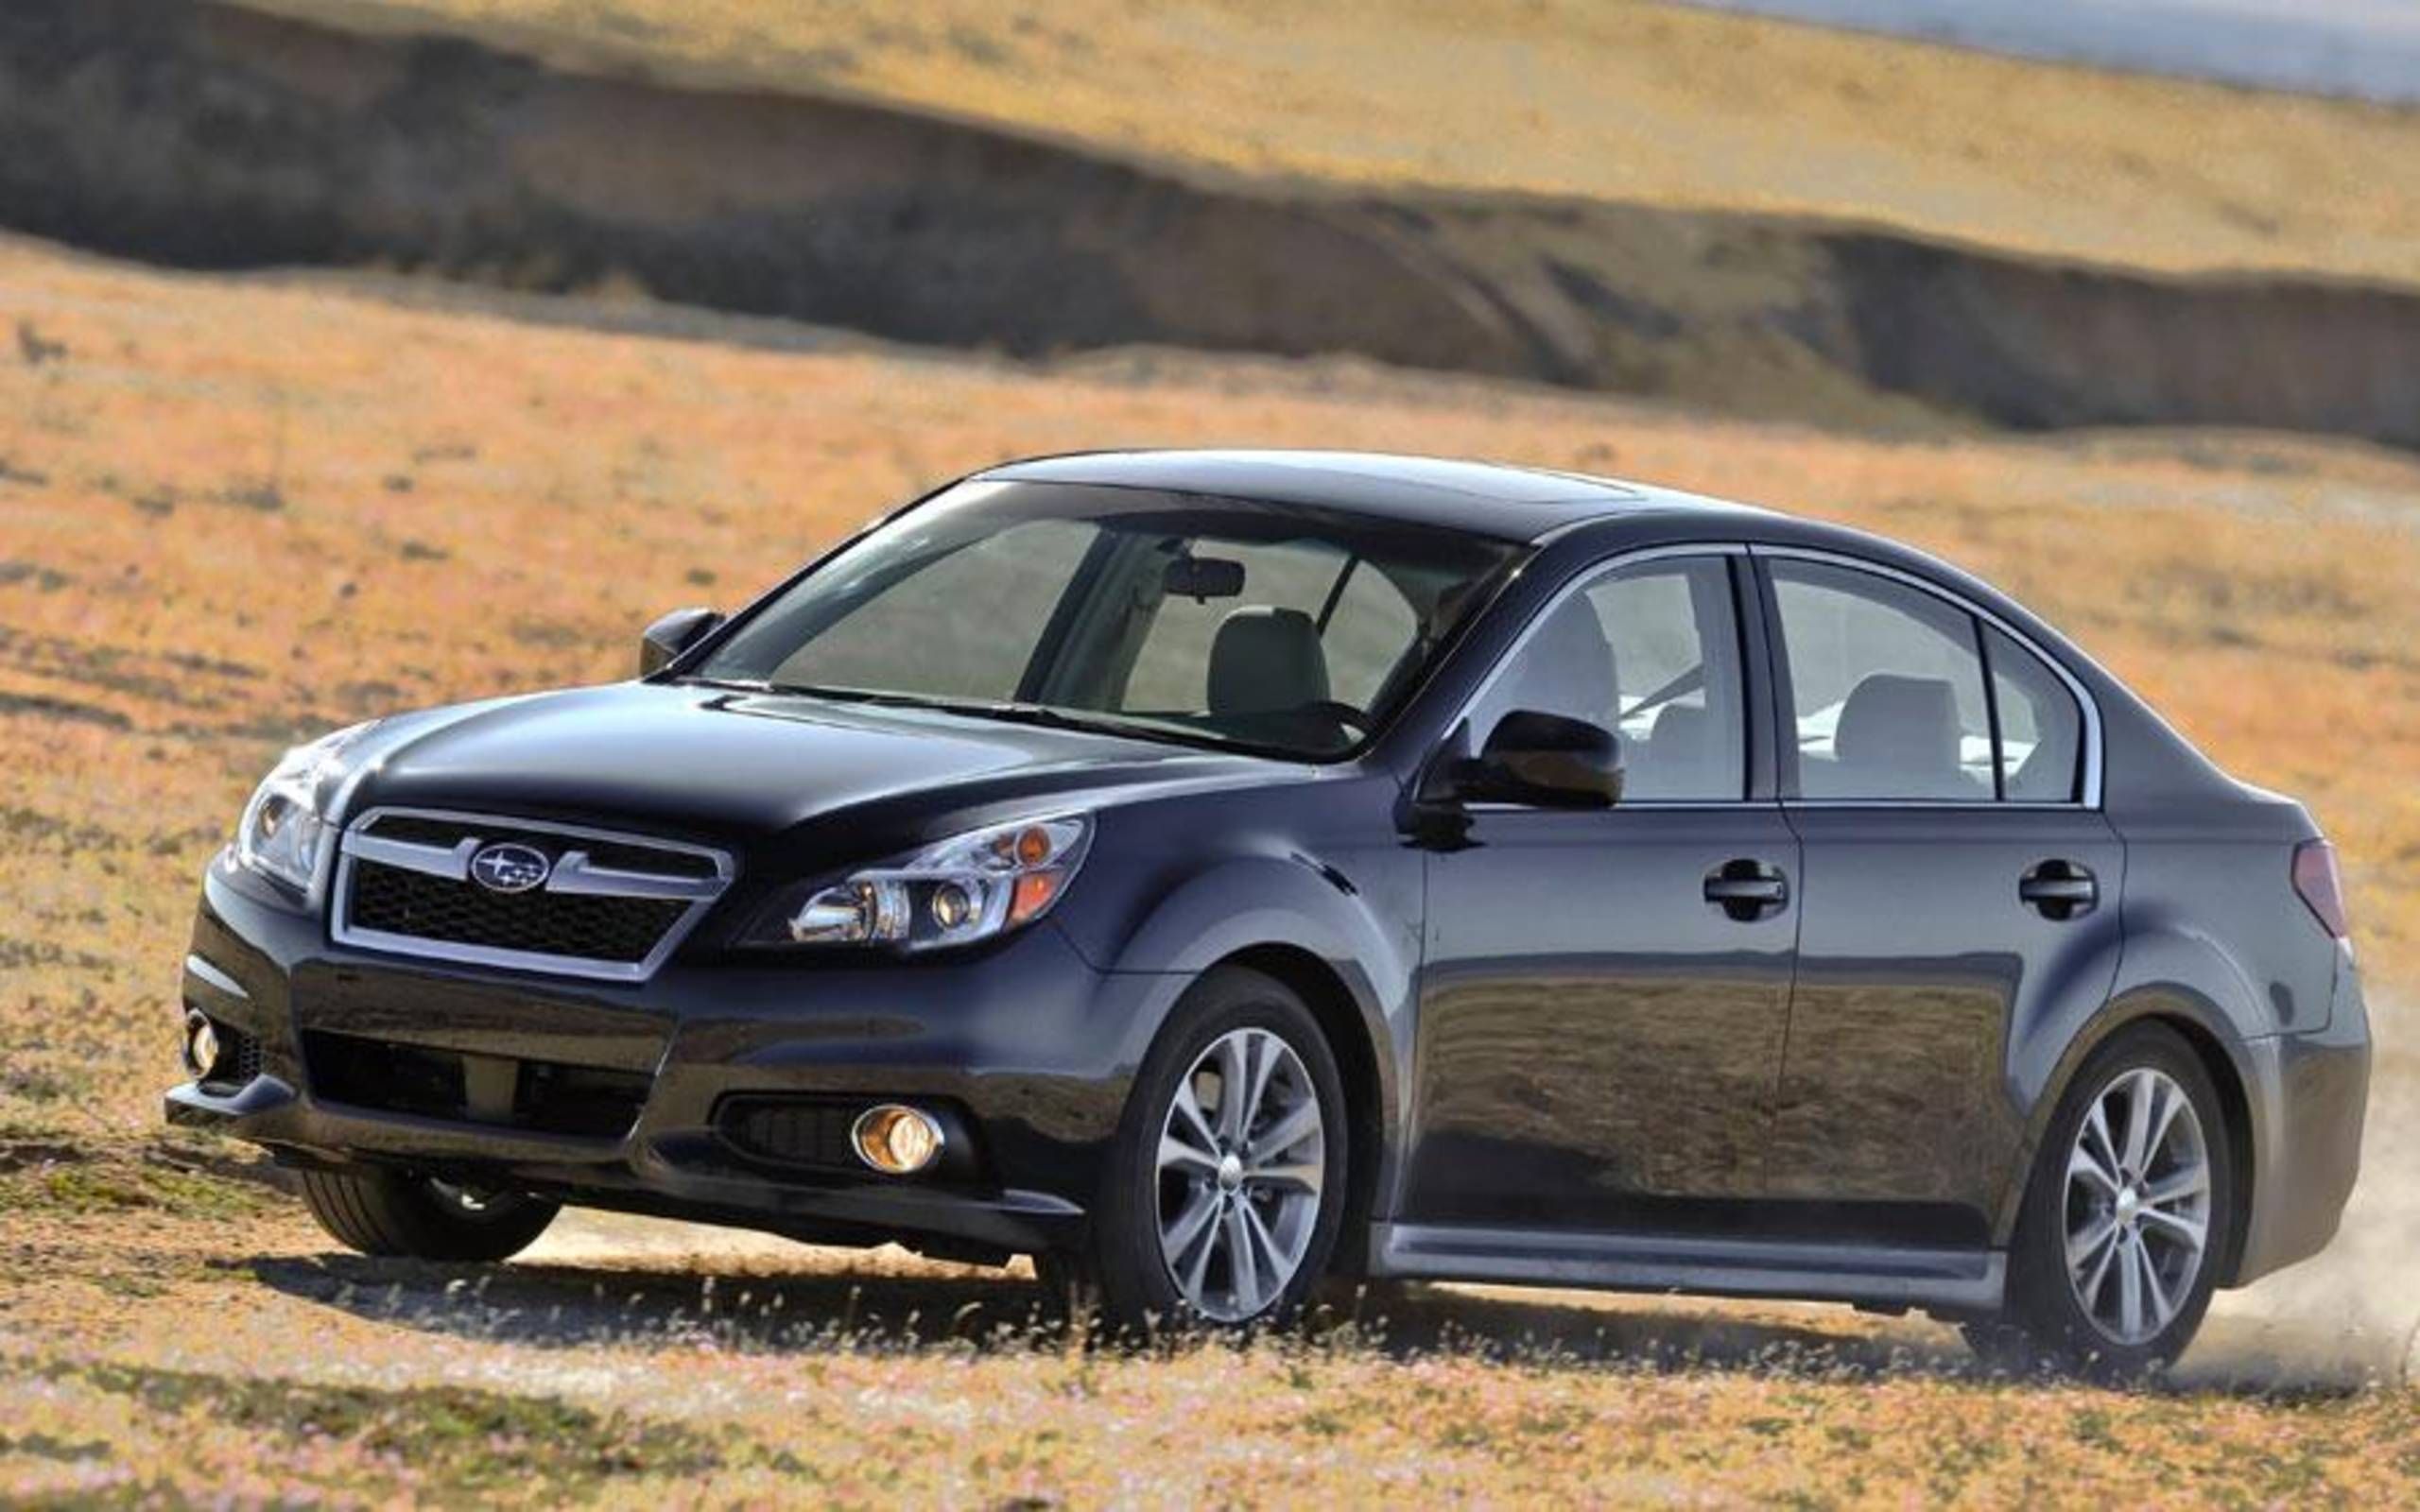 2014 Subaru Legacy 2.5i Sport review notes